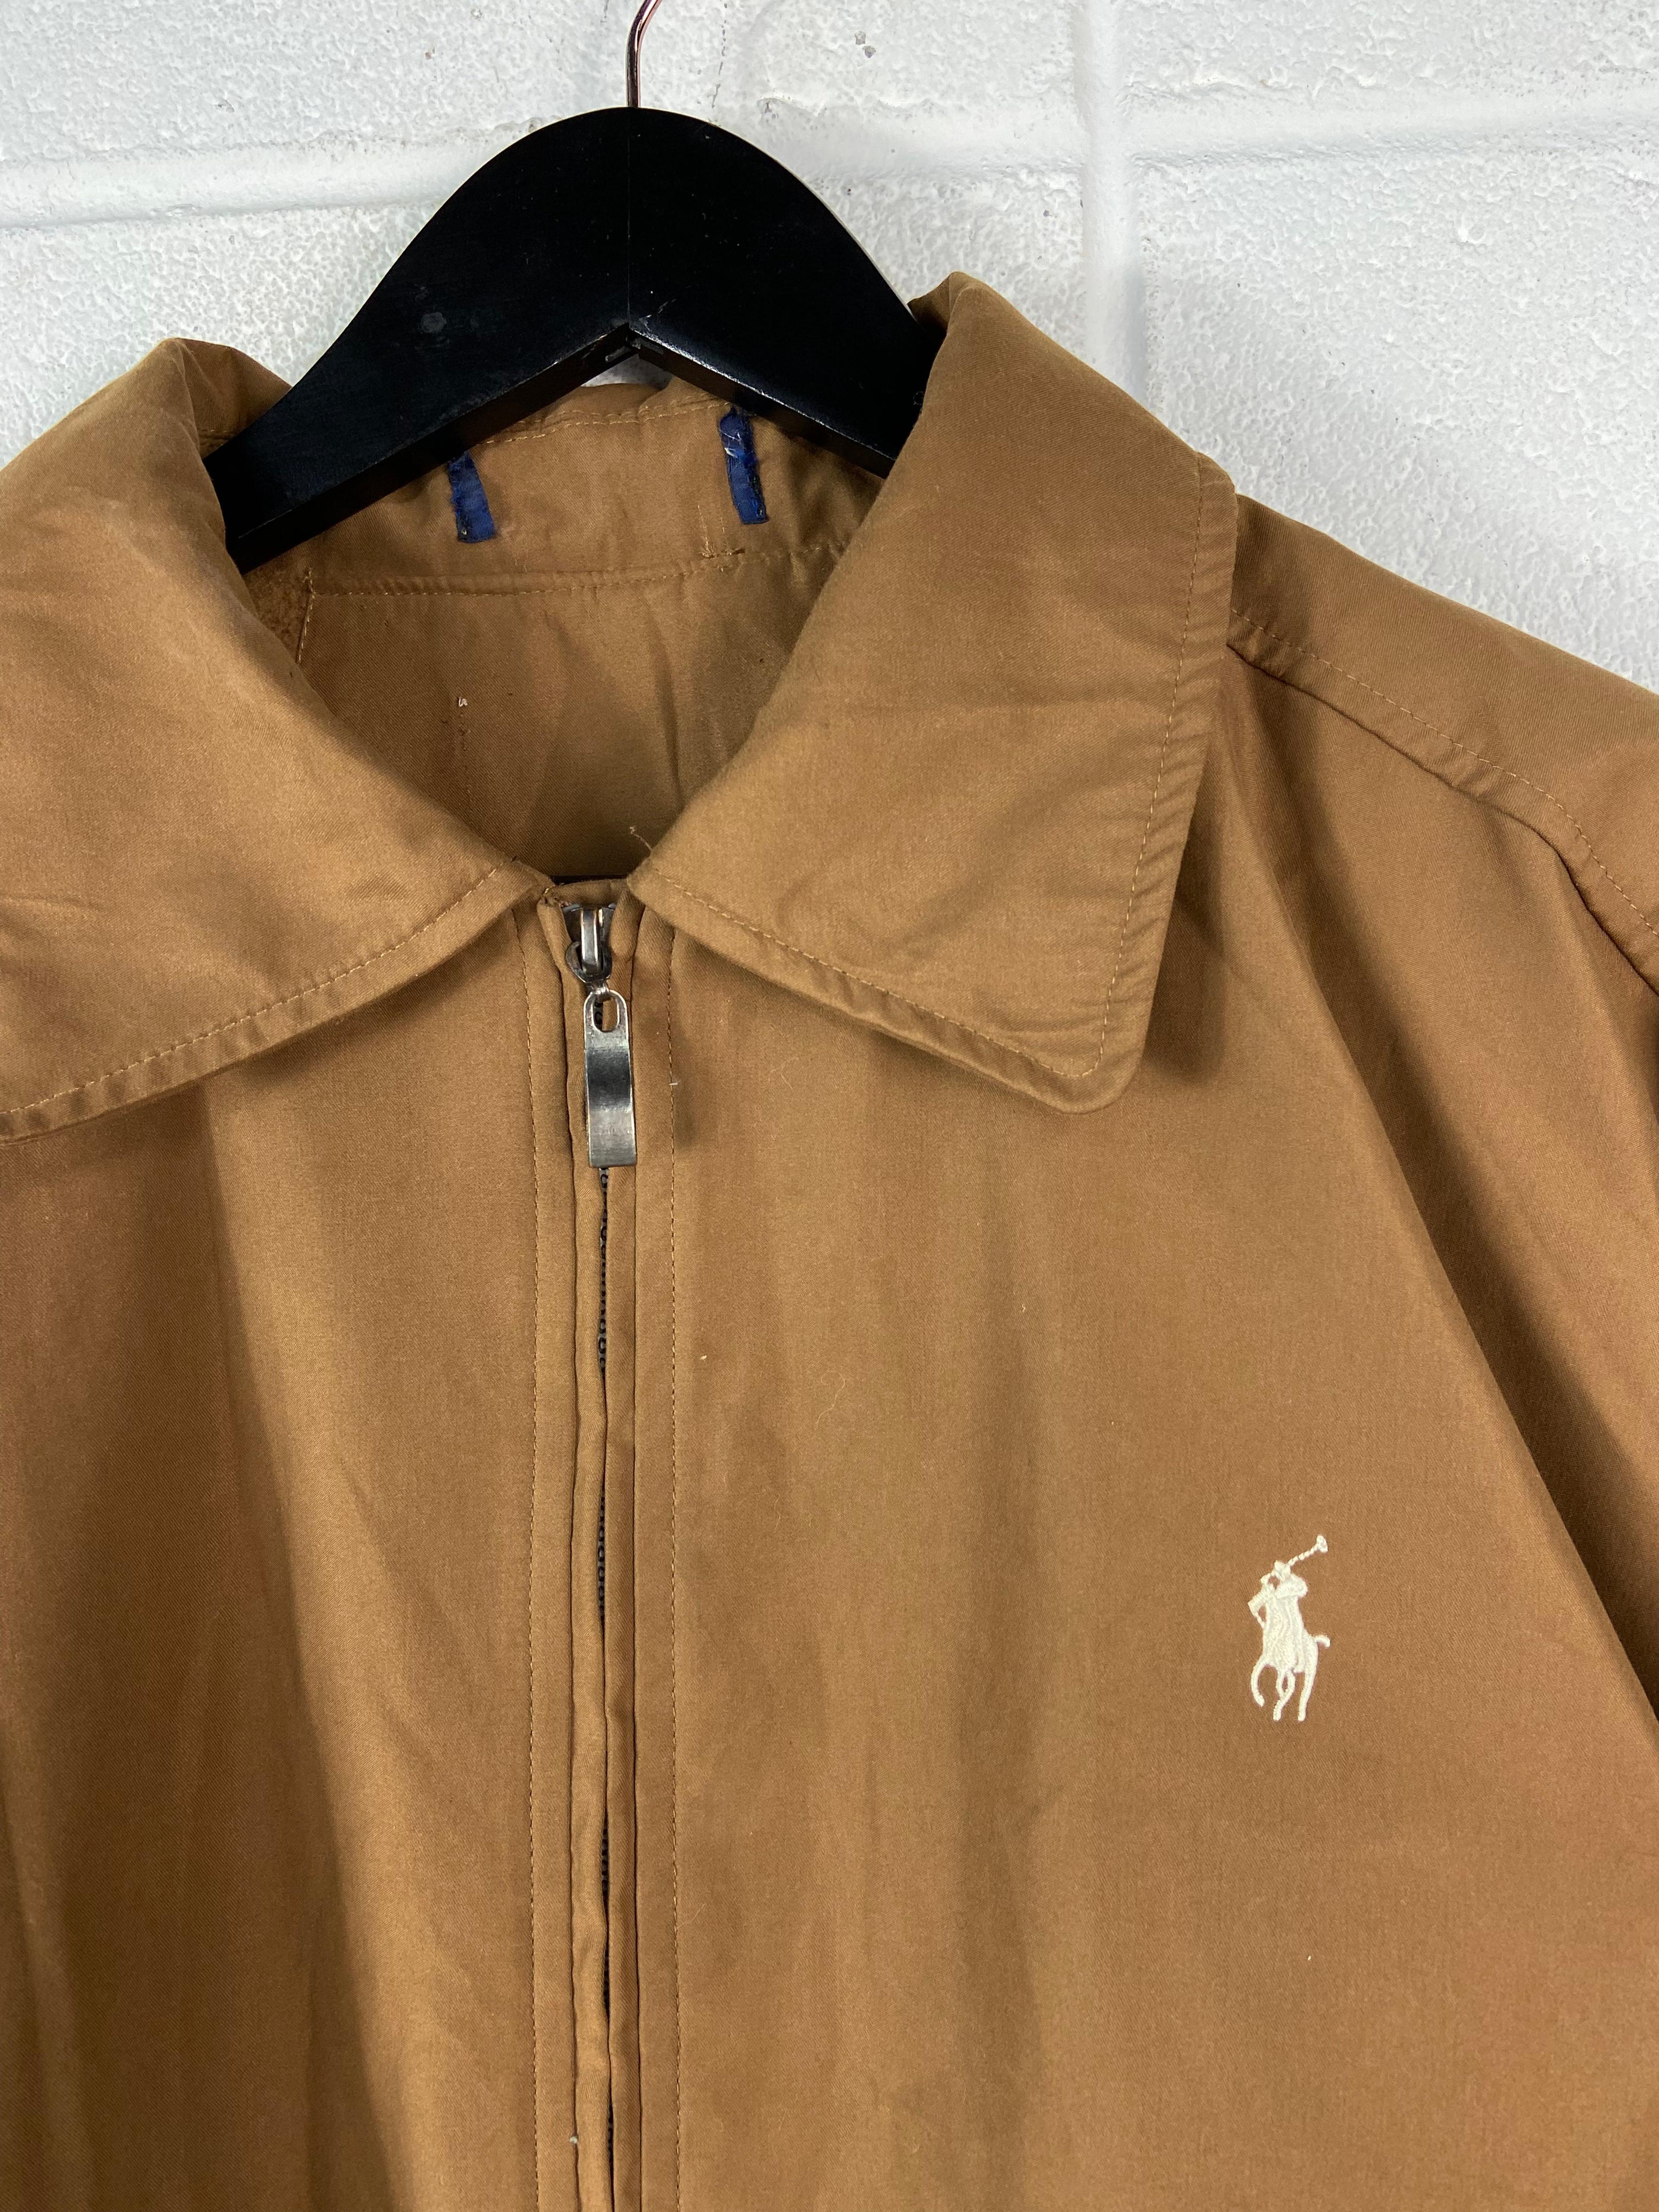 Alternate View 1 of VTG Polo Ralph Lauren Brown Zip Up Jacket Sz XL